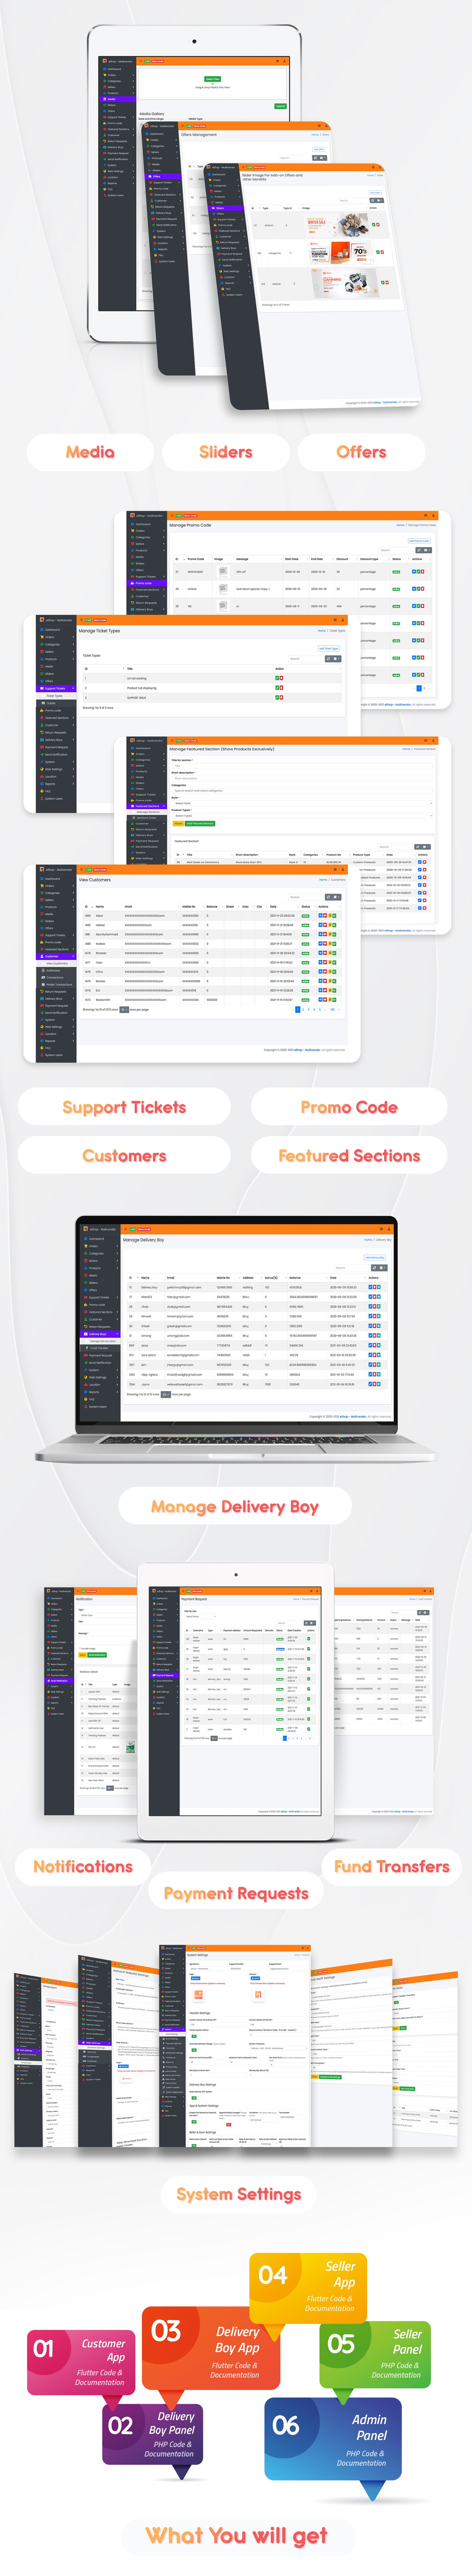 eShop - Multi Vendor eCommerce App & eCommerce Vendor Marketplace Flutter App - 33